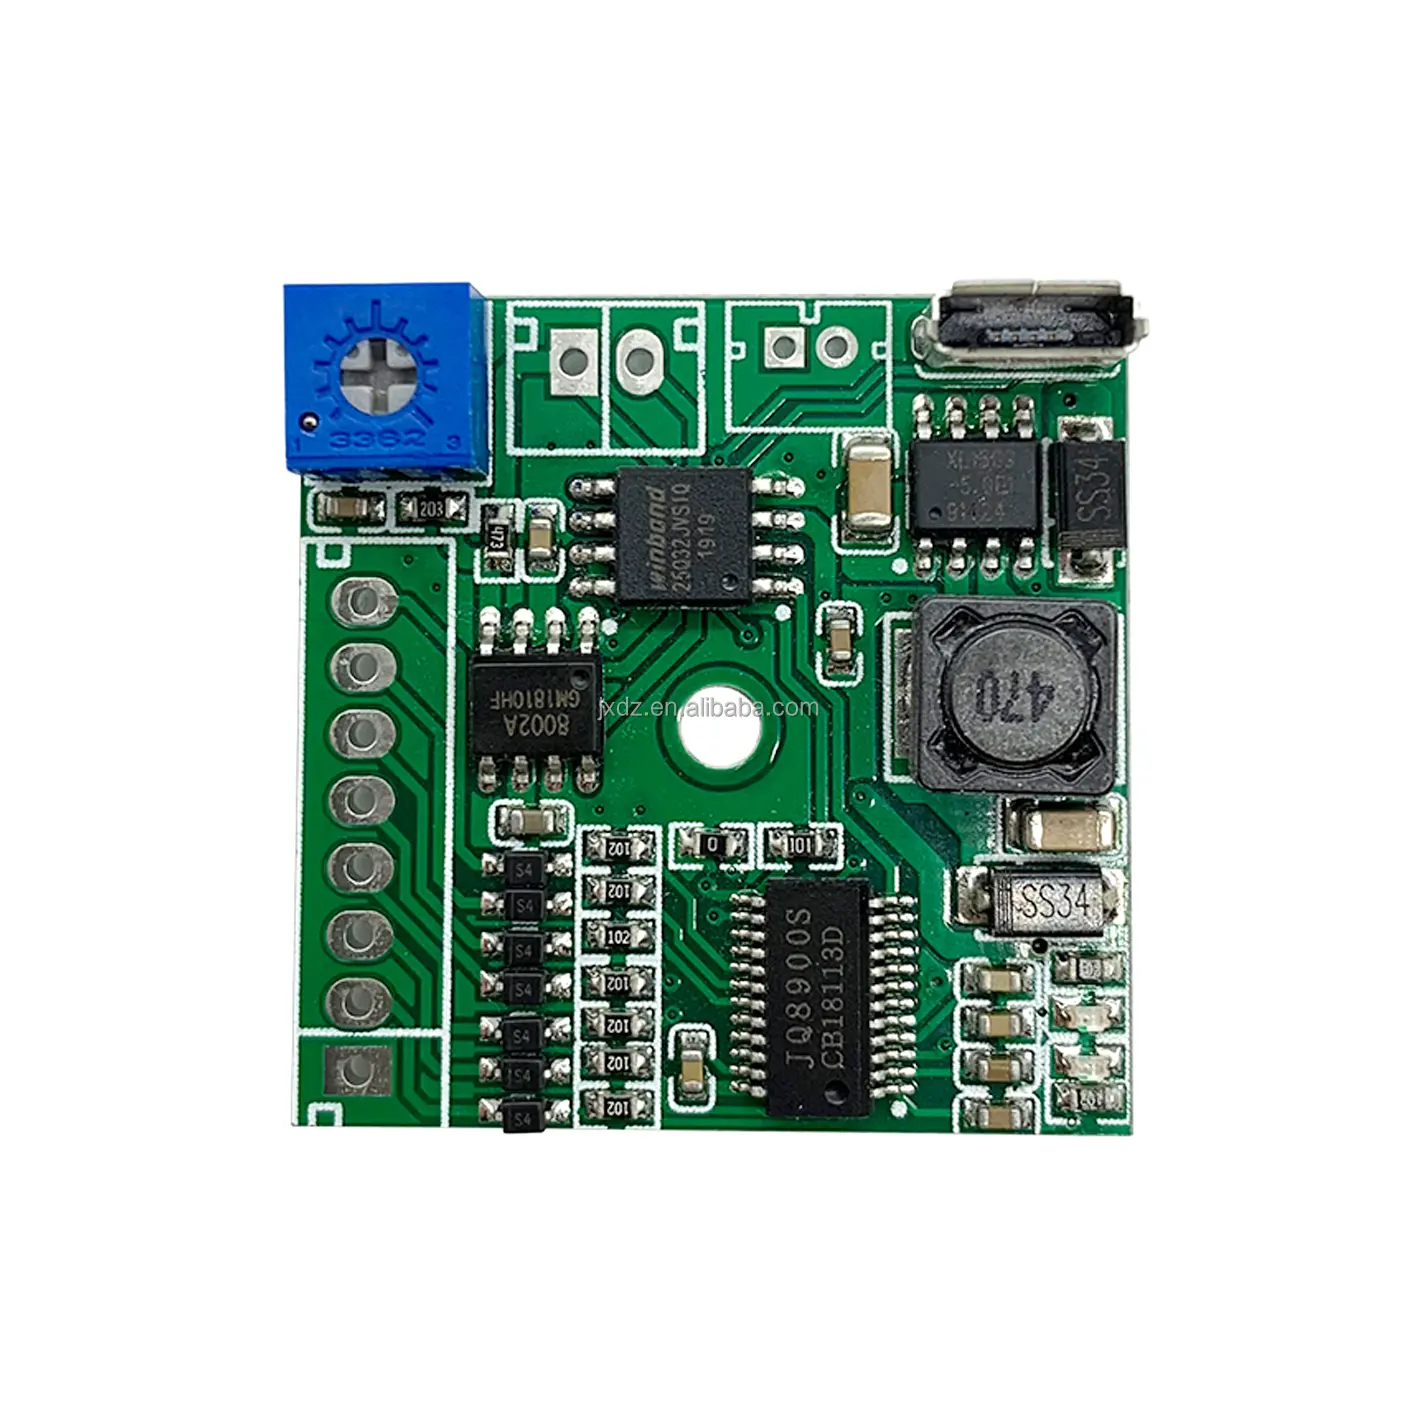 Voice module plays sound broadcast serial port recognition module voice chip control module JR921 NEW